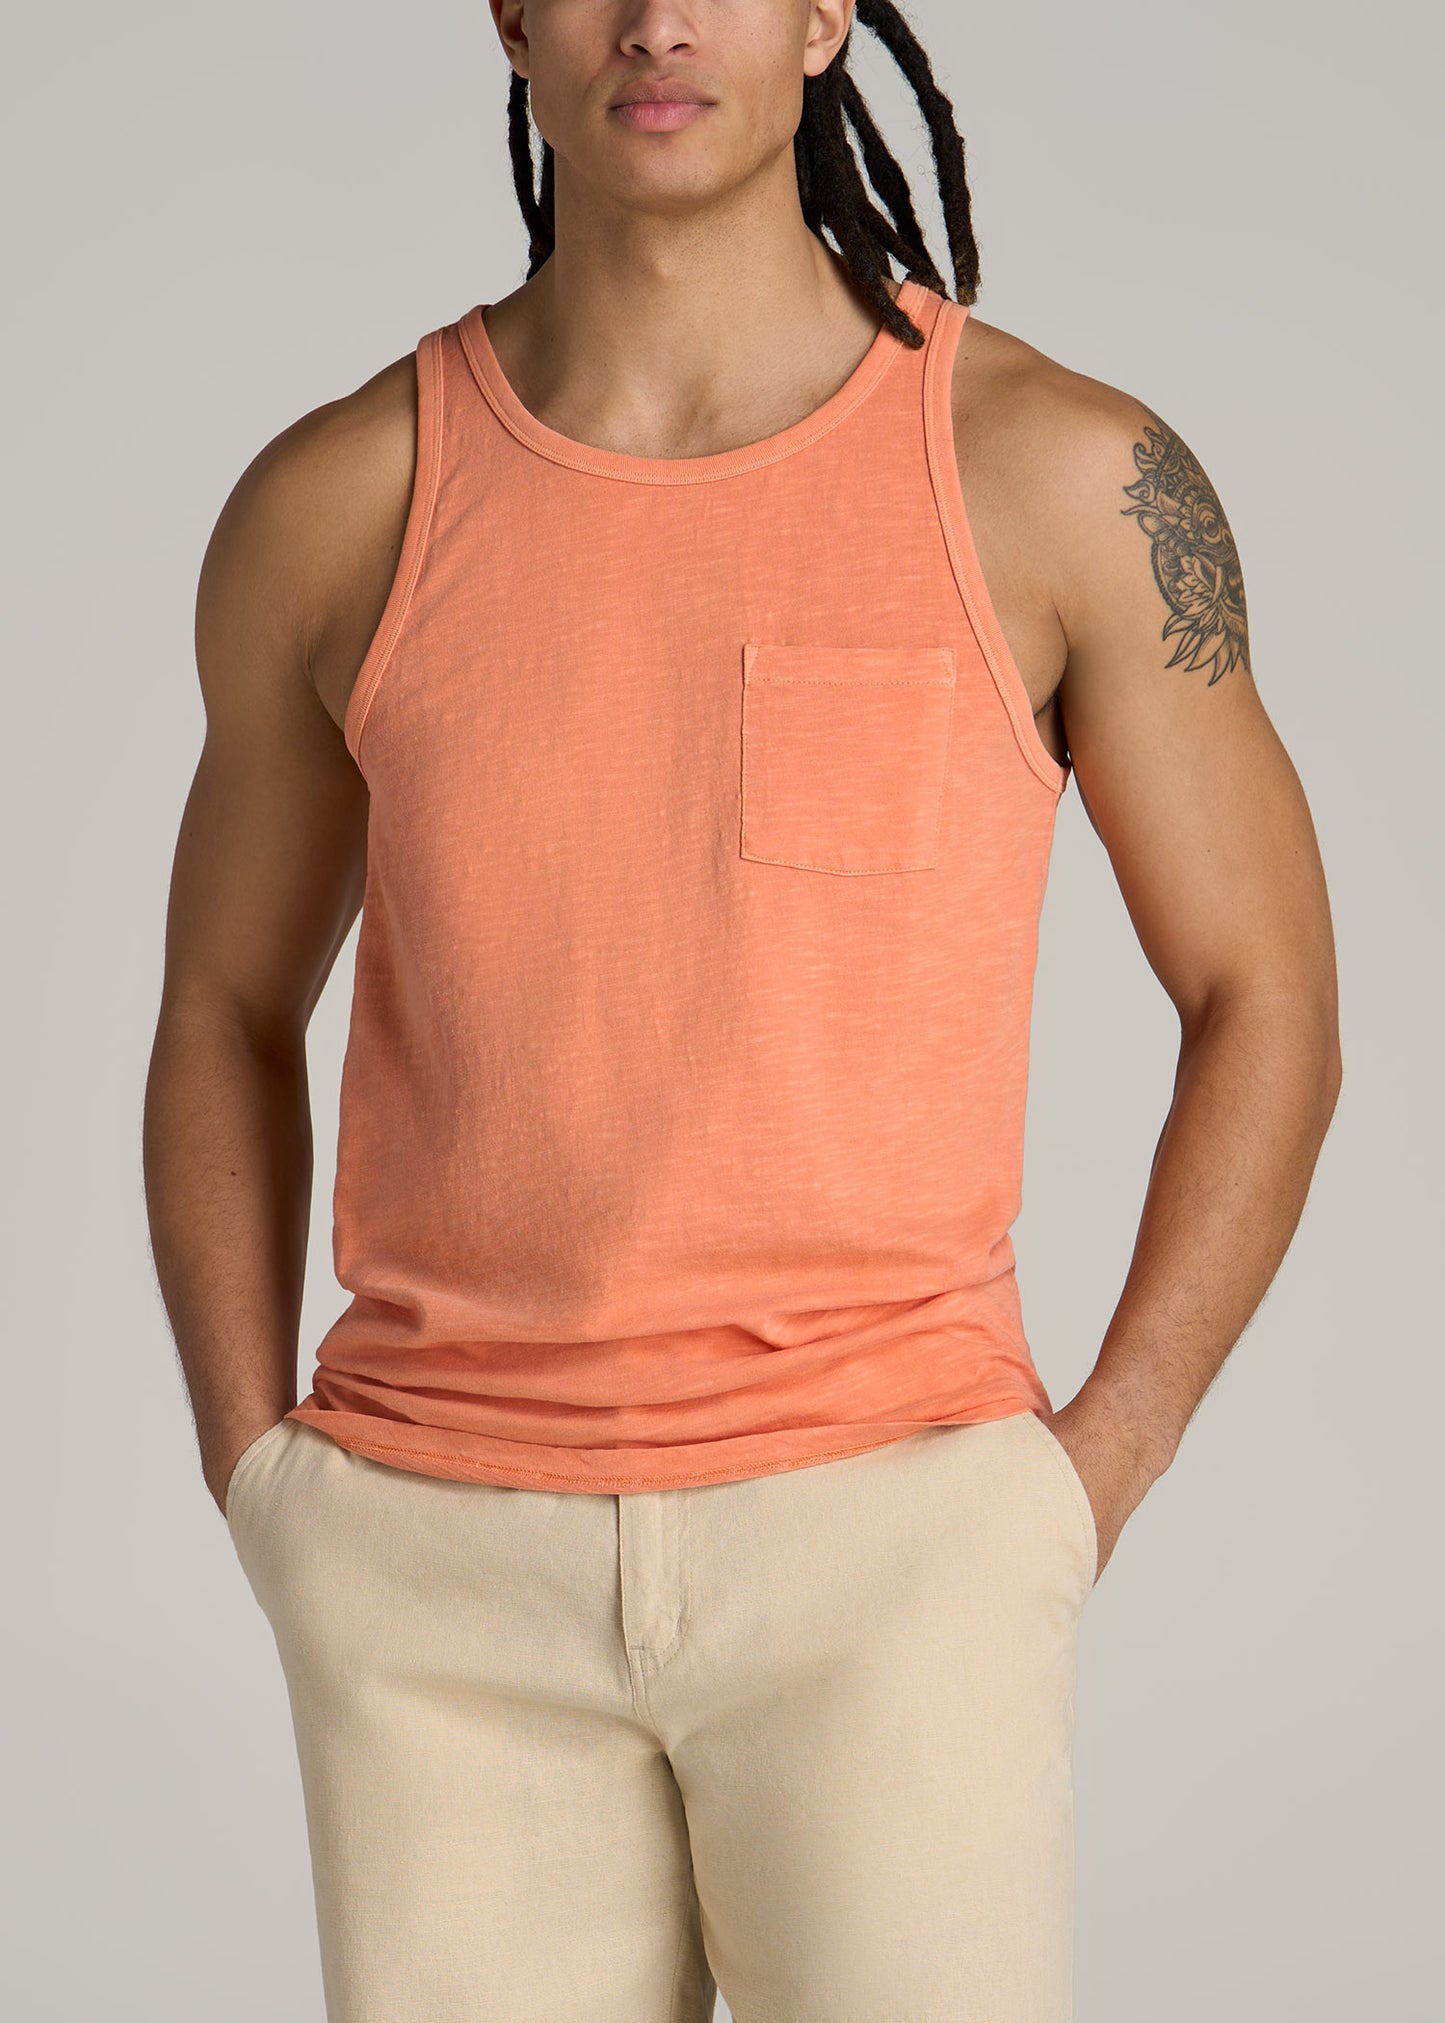 Garment Dyed Slub Pocket Tall Men's Tank Top in Apricot Crush